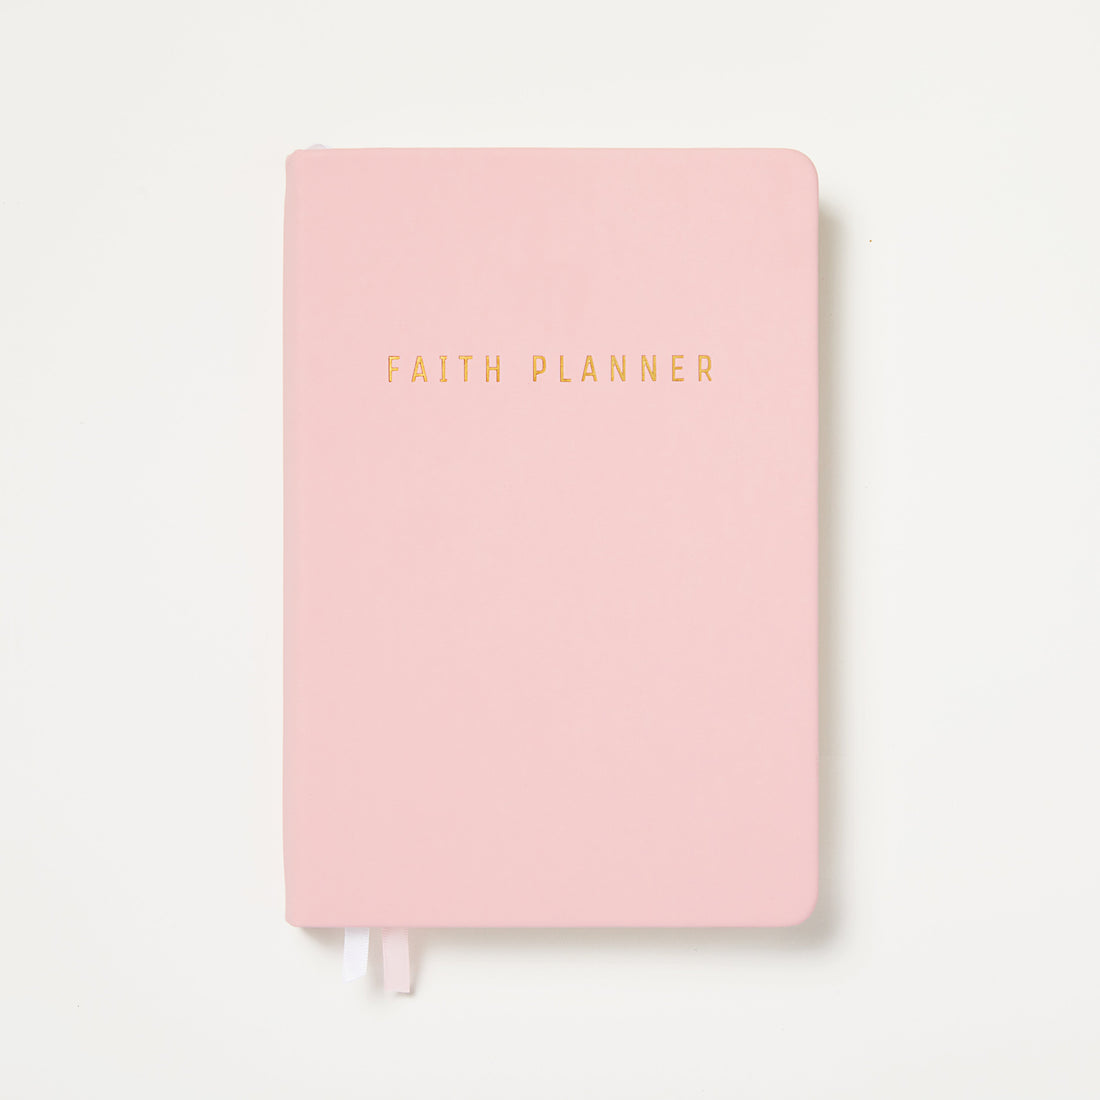 How to Use a Christian Planner - Faith Planner